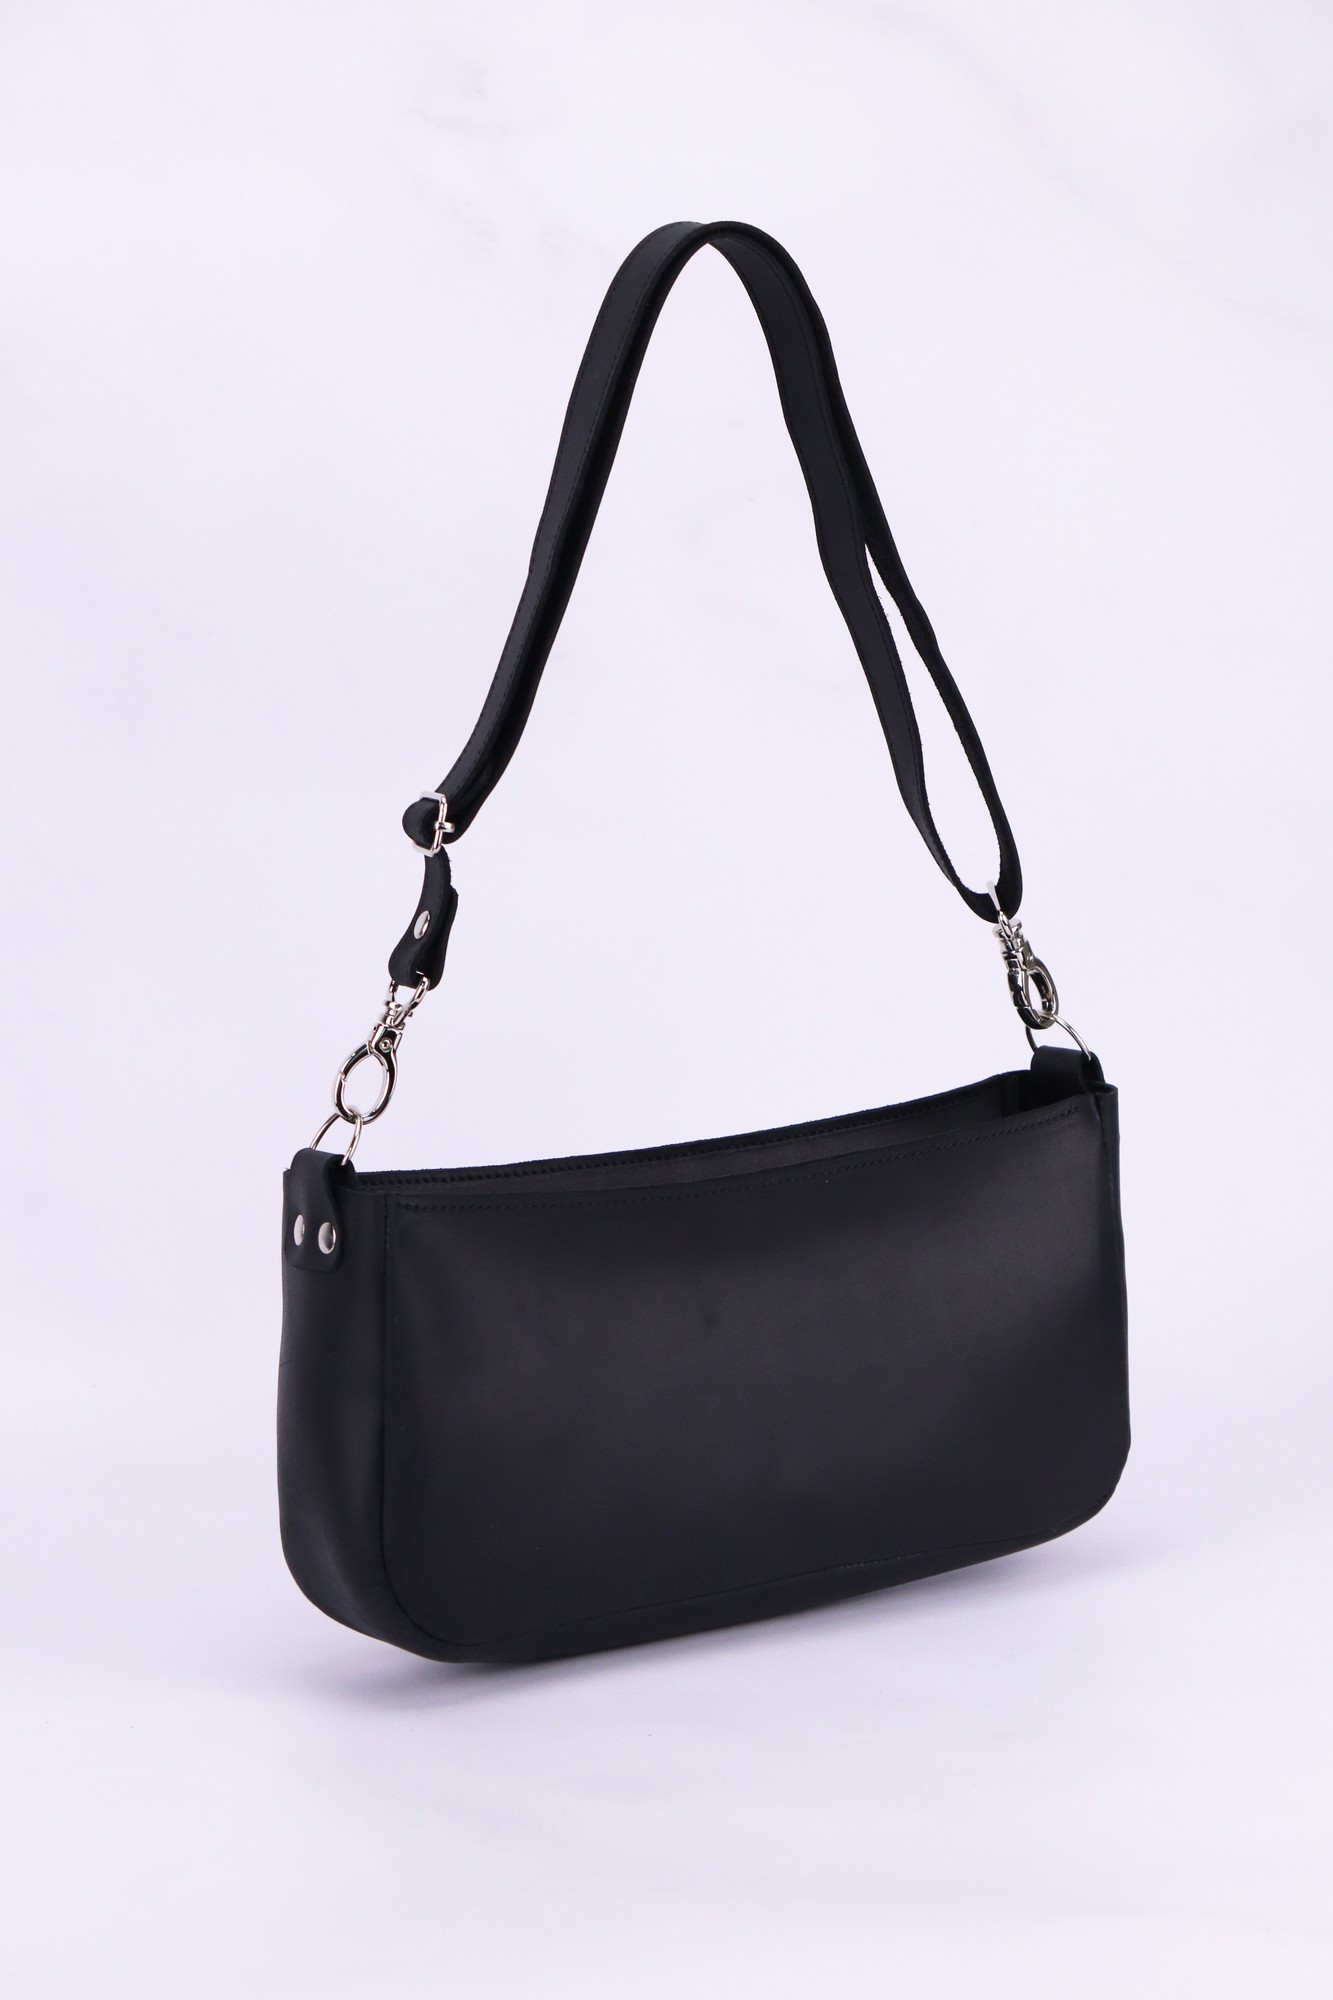 Leather baguette bag for women / Elegant crossbody bag / Black - 1016